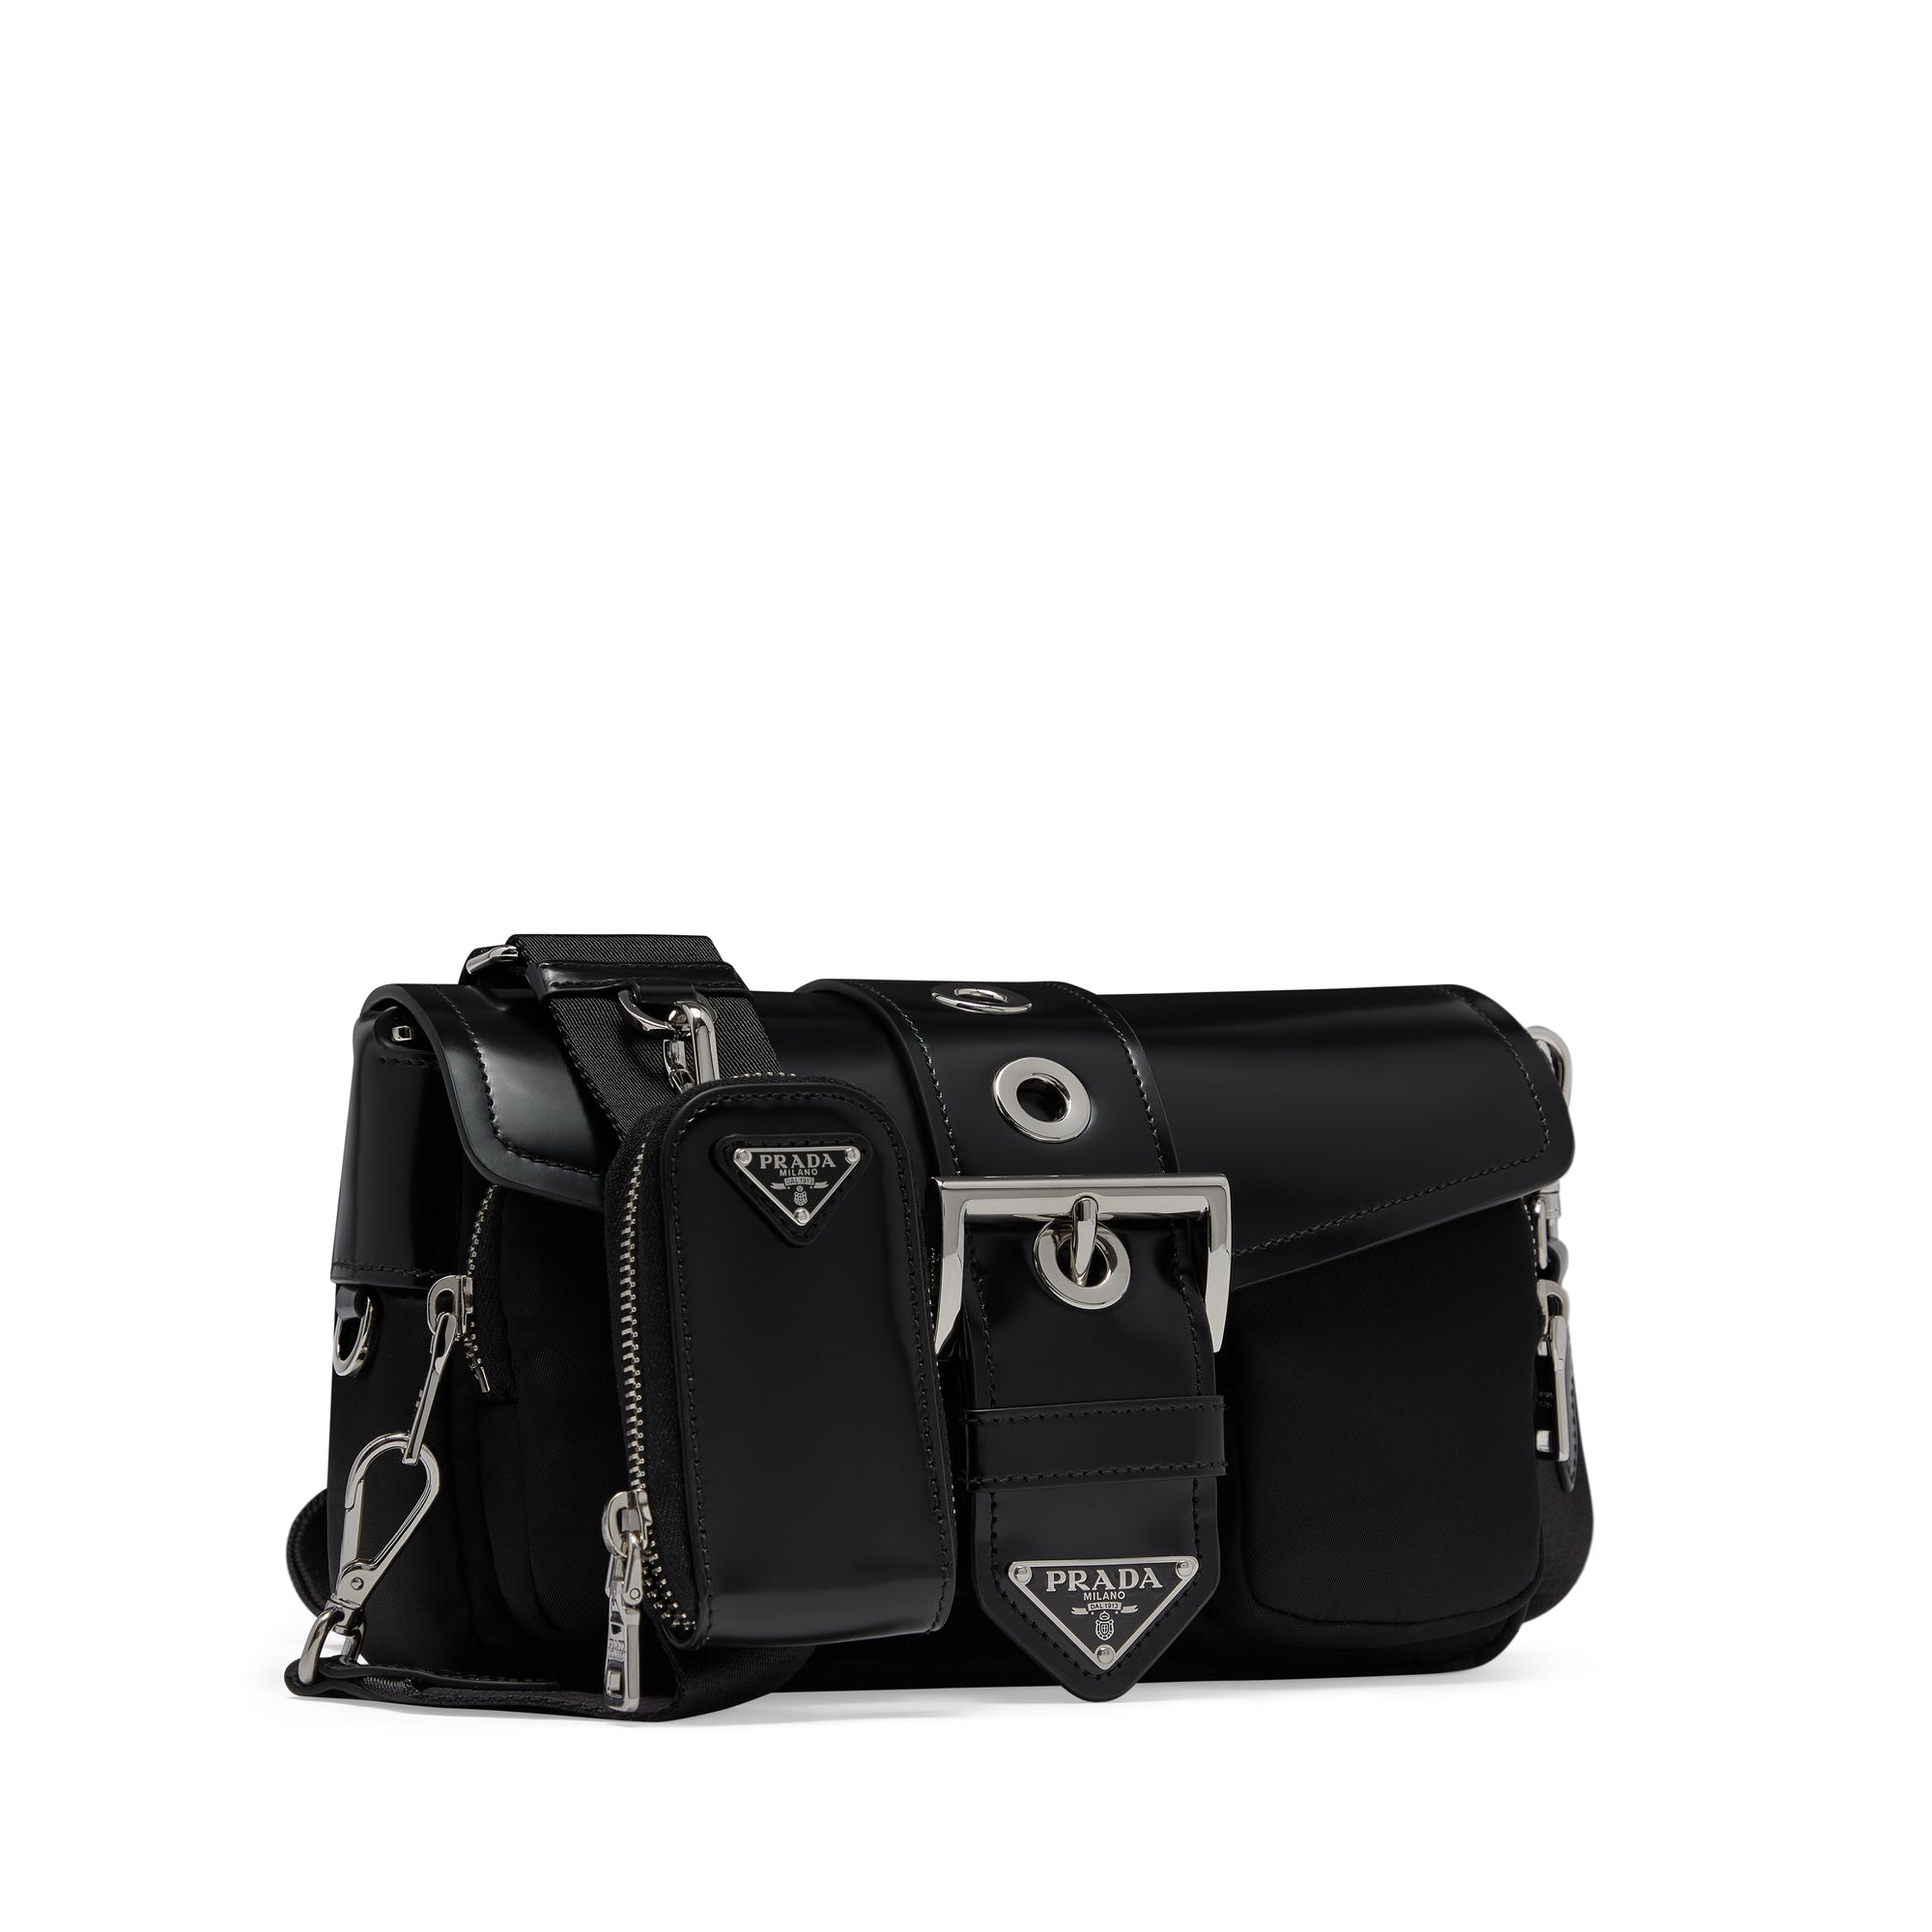 Prada - Women’s Pocket Recycled-Nylon Cross-Body Bag - (Black) view 2